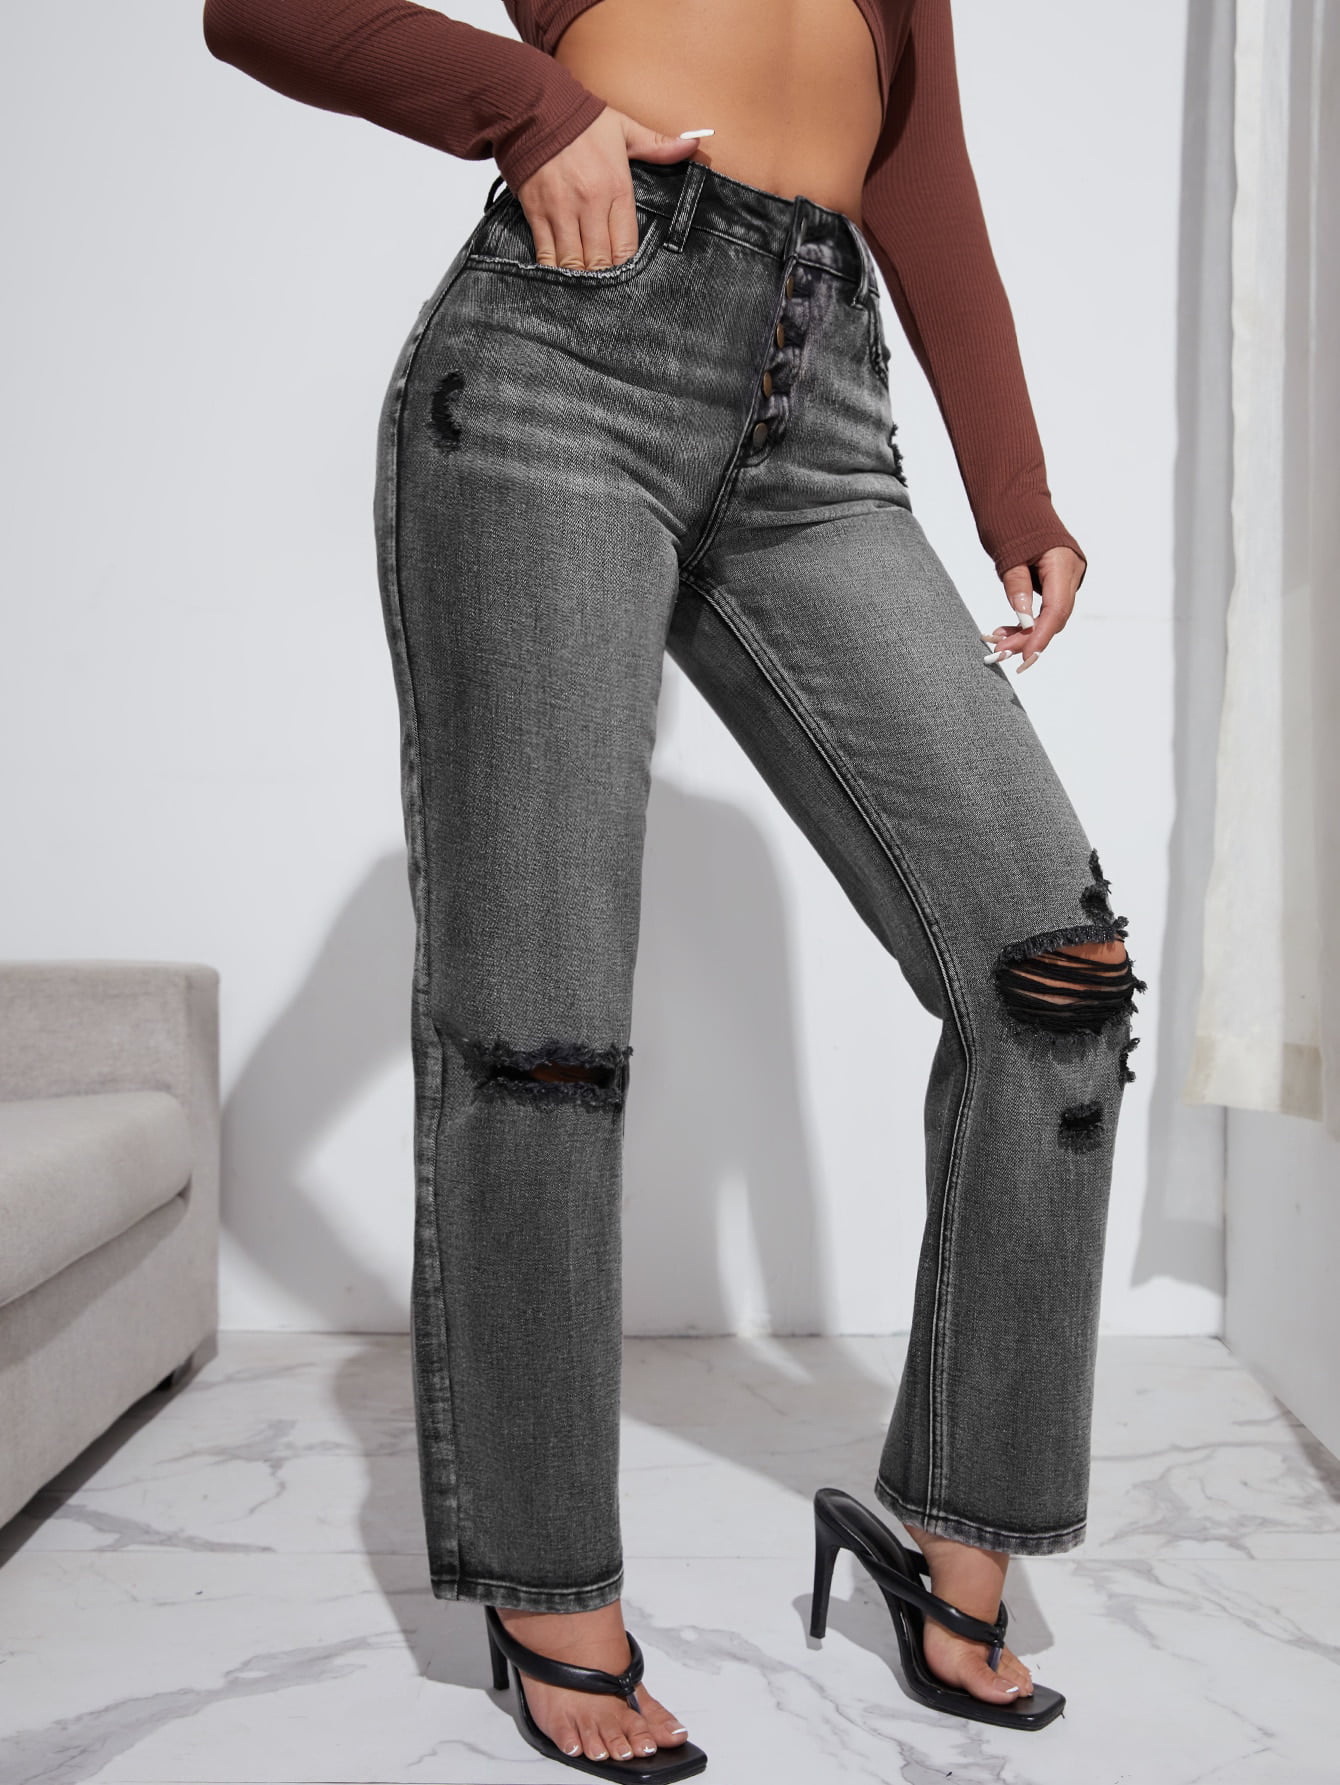 Closer-to-U Grey Shredded High Waist Jeans Ripped Jeans for Women 2019 Casual High Waisted Jeans